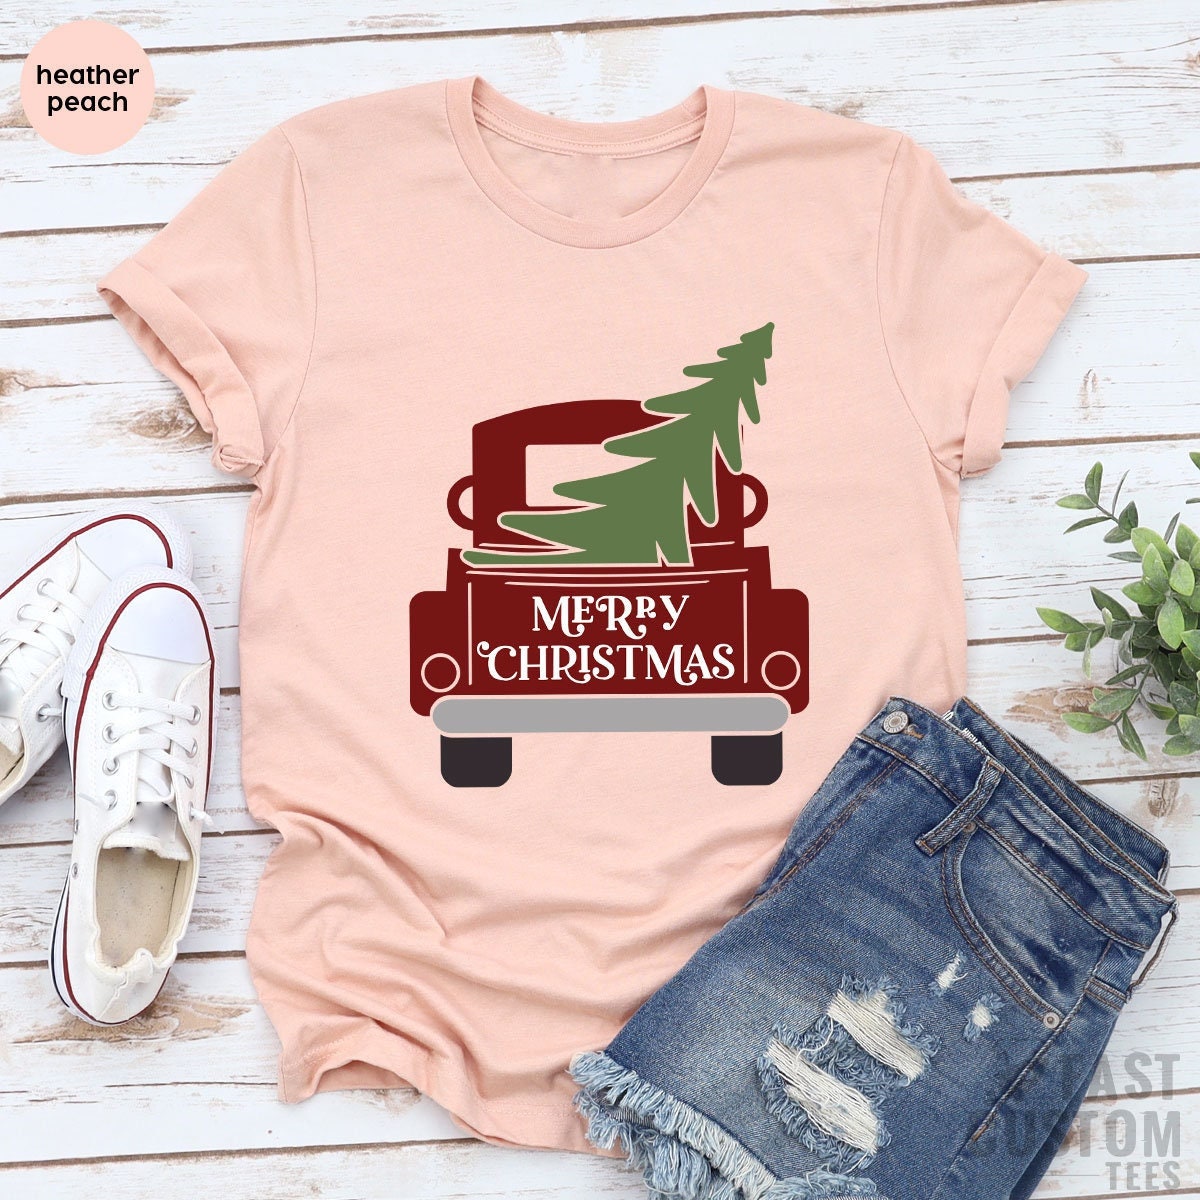 Christmas Shirts for Women, Christmas Tee, Christmas Truck Shirt, Cute Christmas Shirts, Christmas T-Shirt, Unisex Adult Tee, Merry Shirt - Fastdeliverytees.com